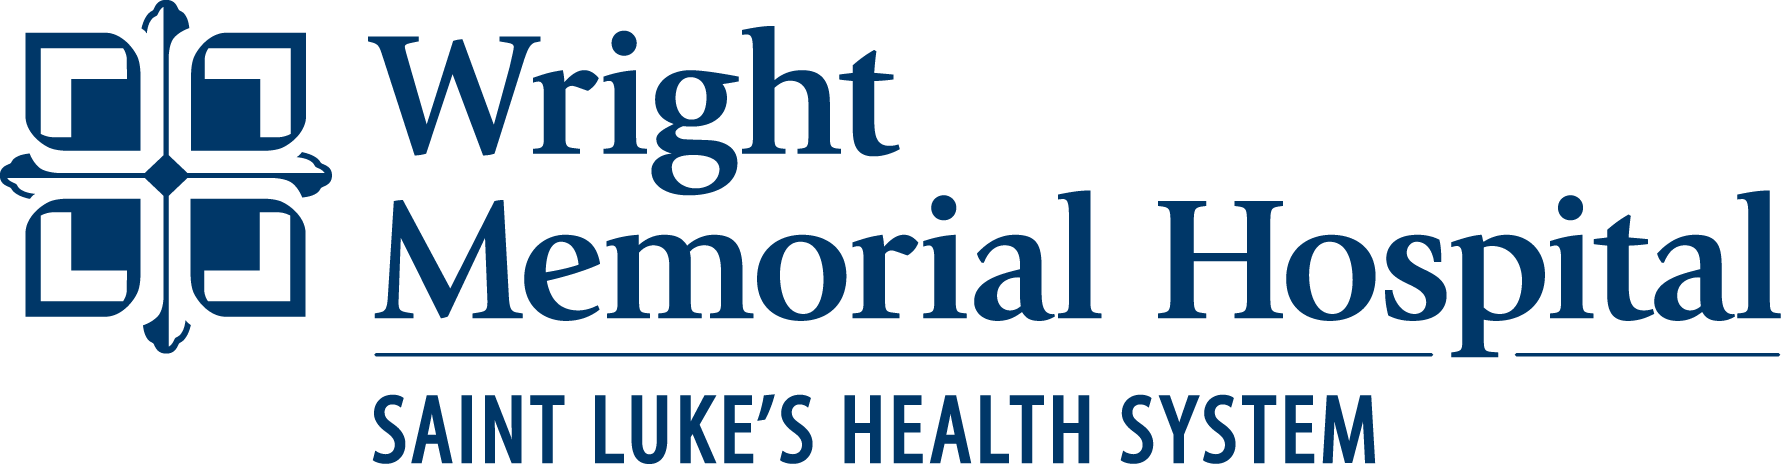 Wright Memorial Hospital Saint Luke's Health System